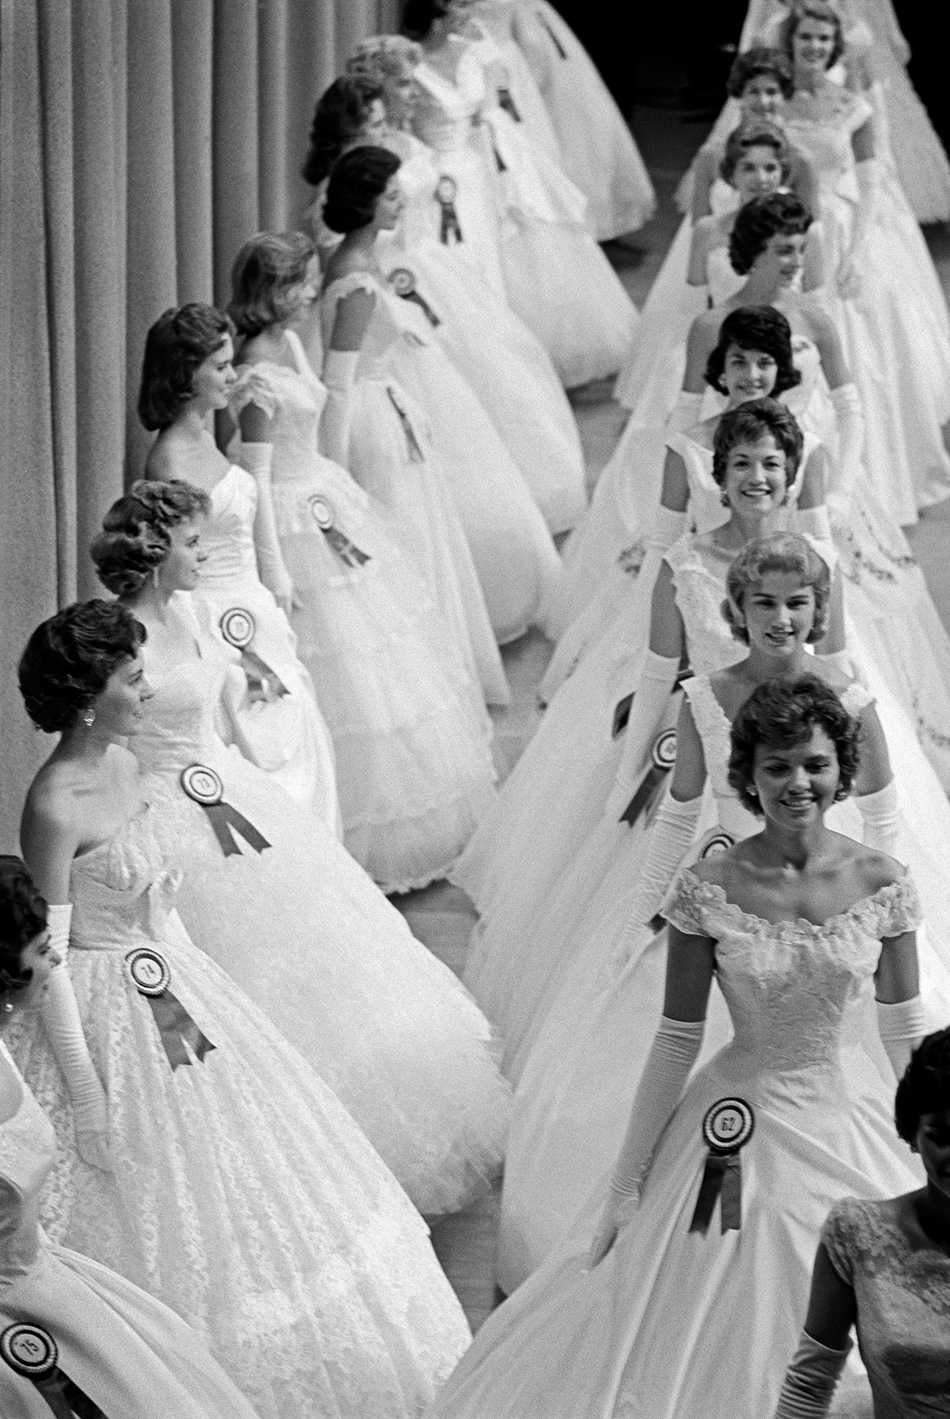 The Miss North Carolina beauty pageant, 1961; photograph by Burt Glinn